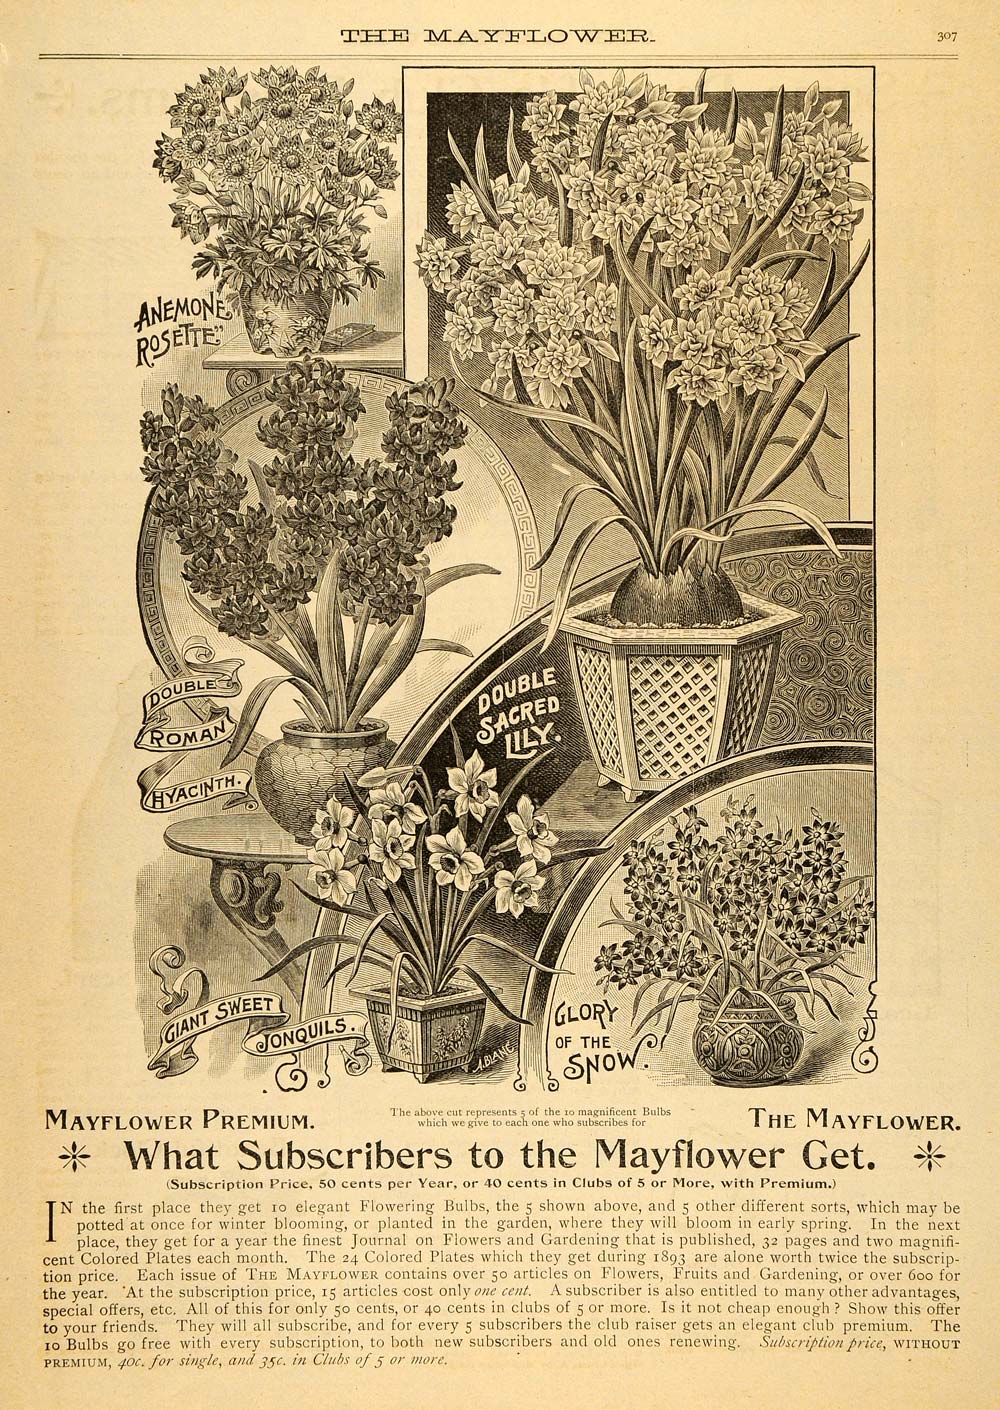 1892 Ad Mayflower Lily Hyacinth Anemone Rosette Flowers - ORIGINAL MAY1